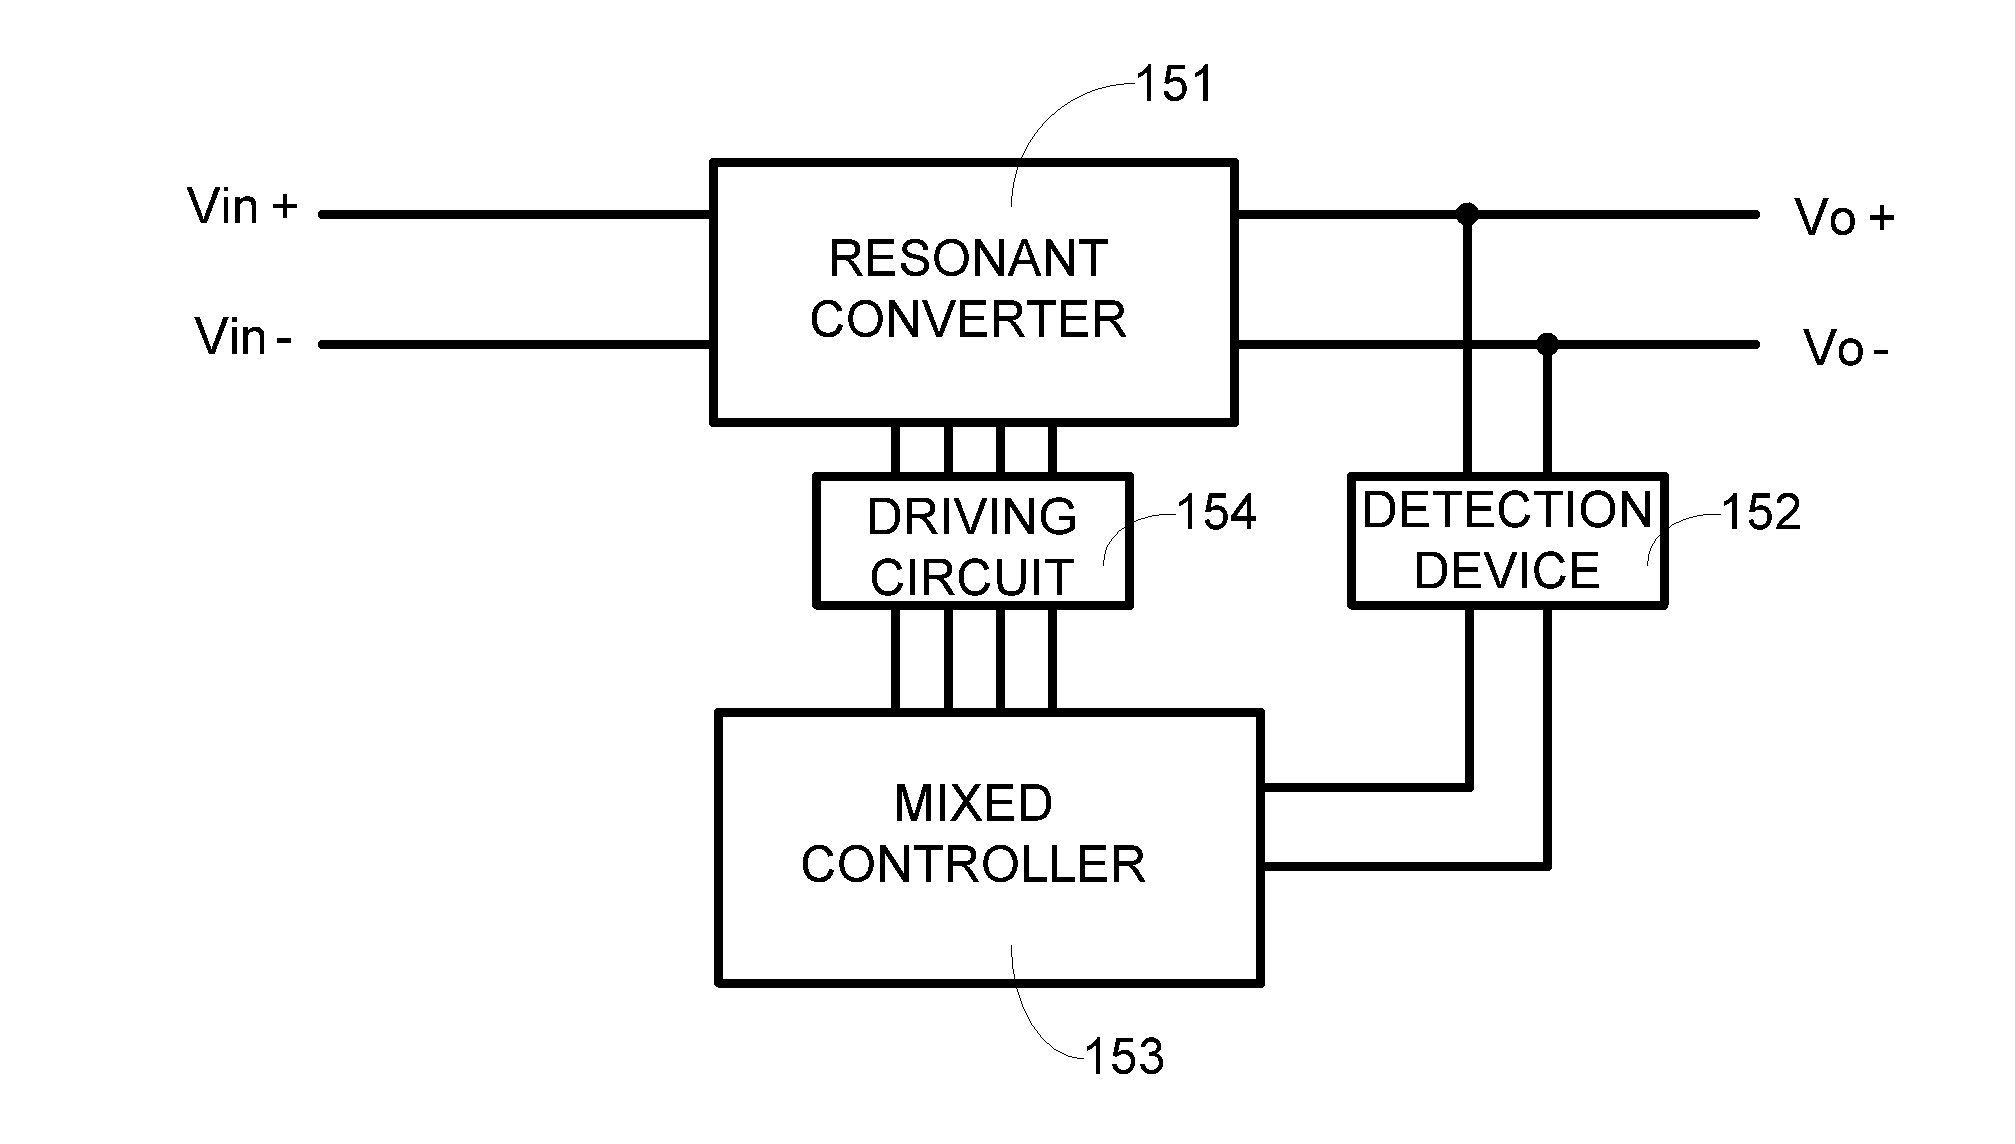 Mixed control method for resonant converter, resonant converter system and mixed controller